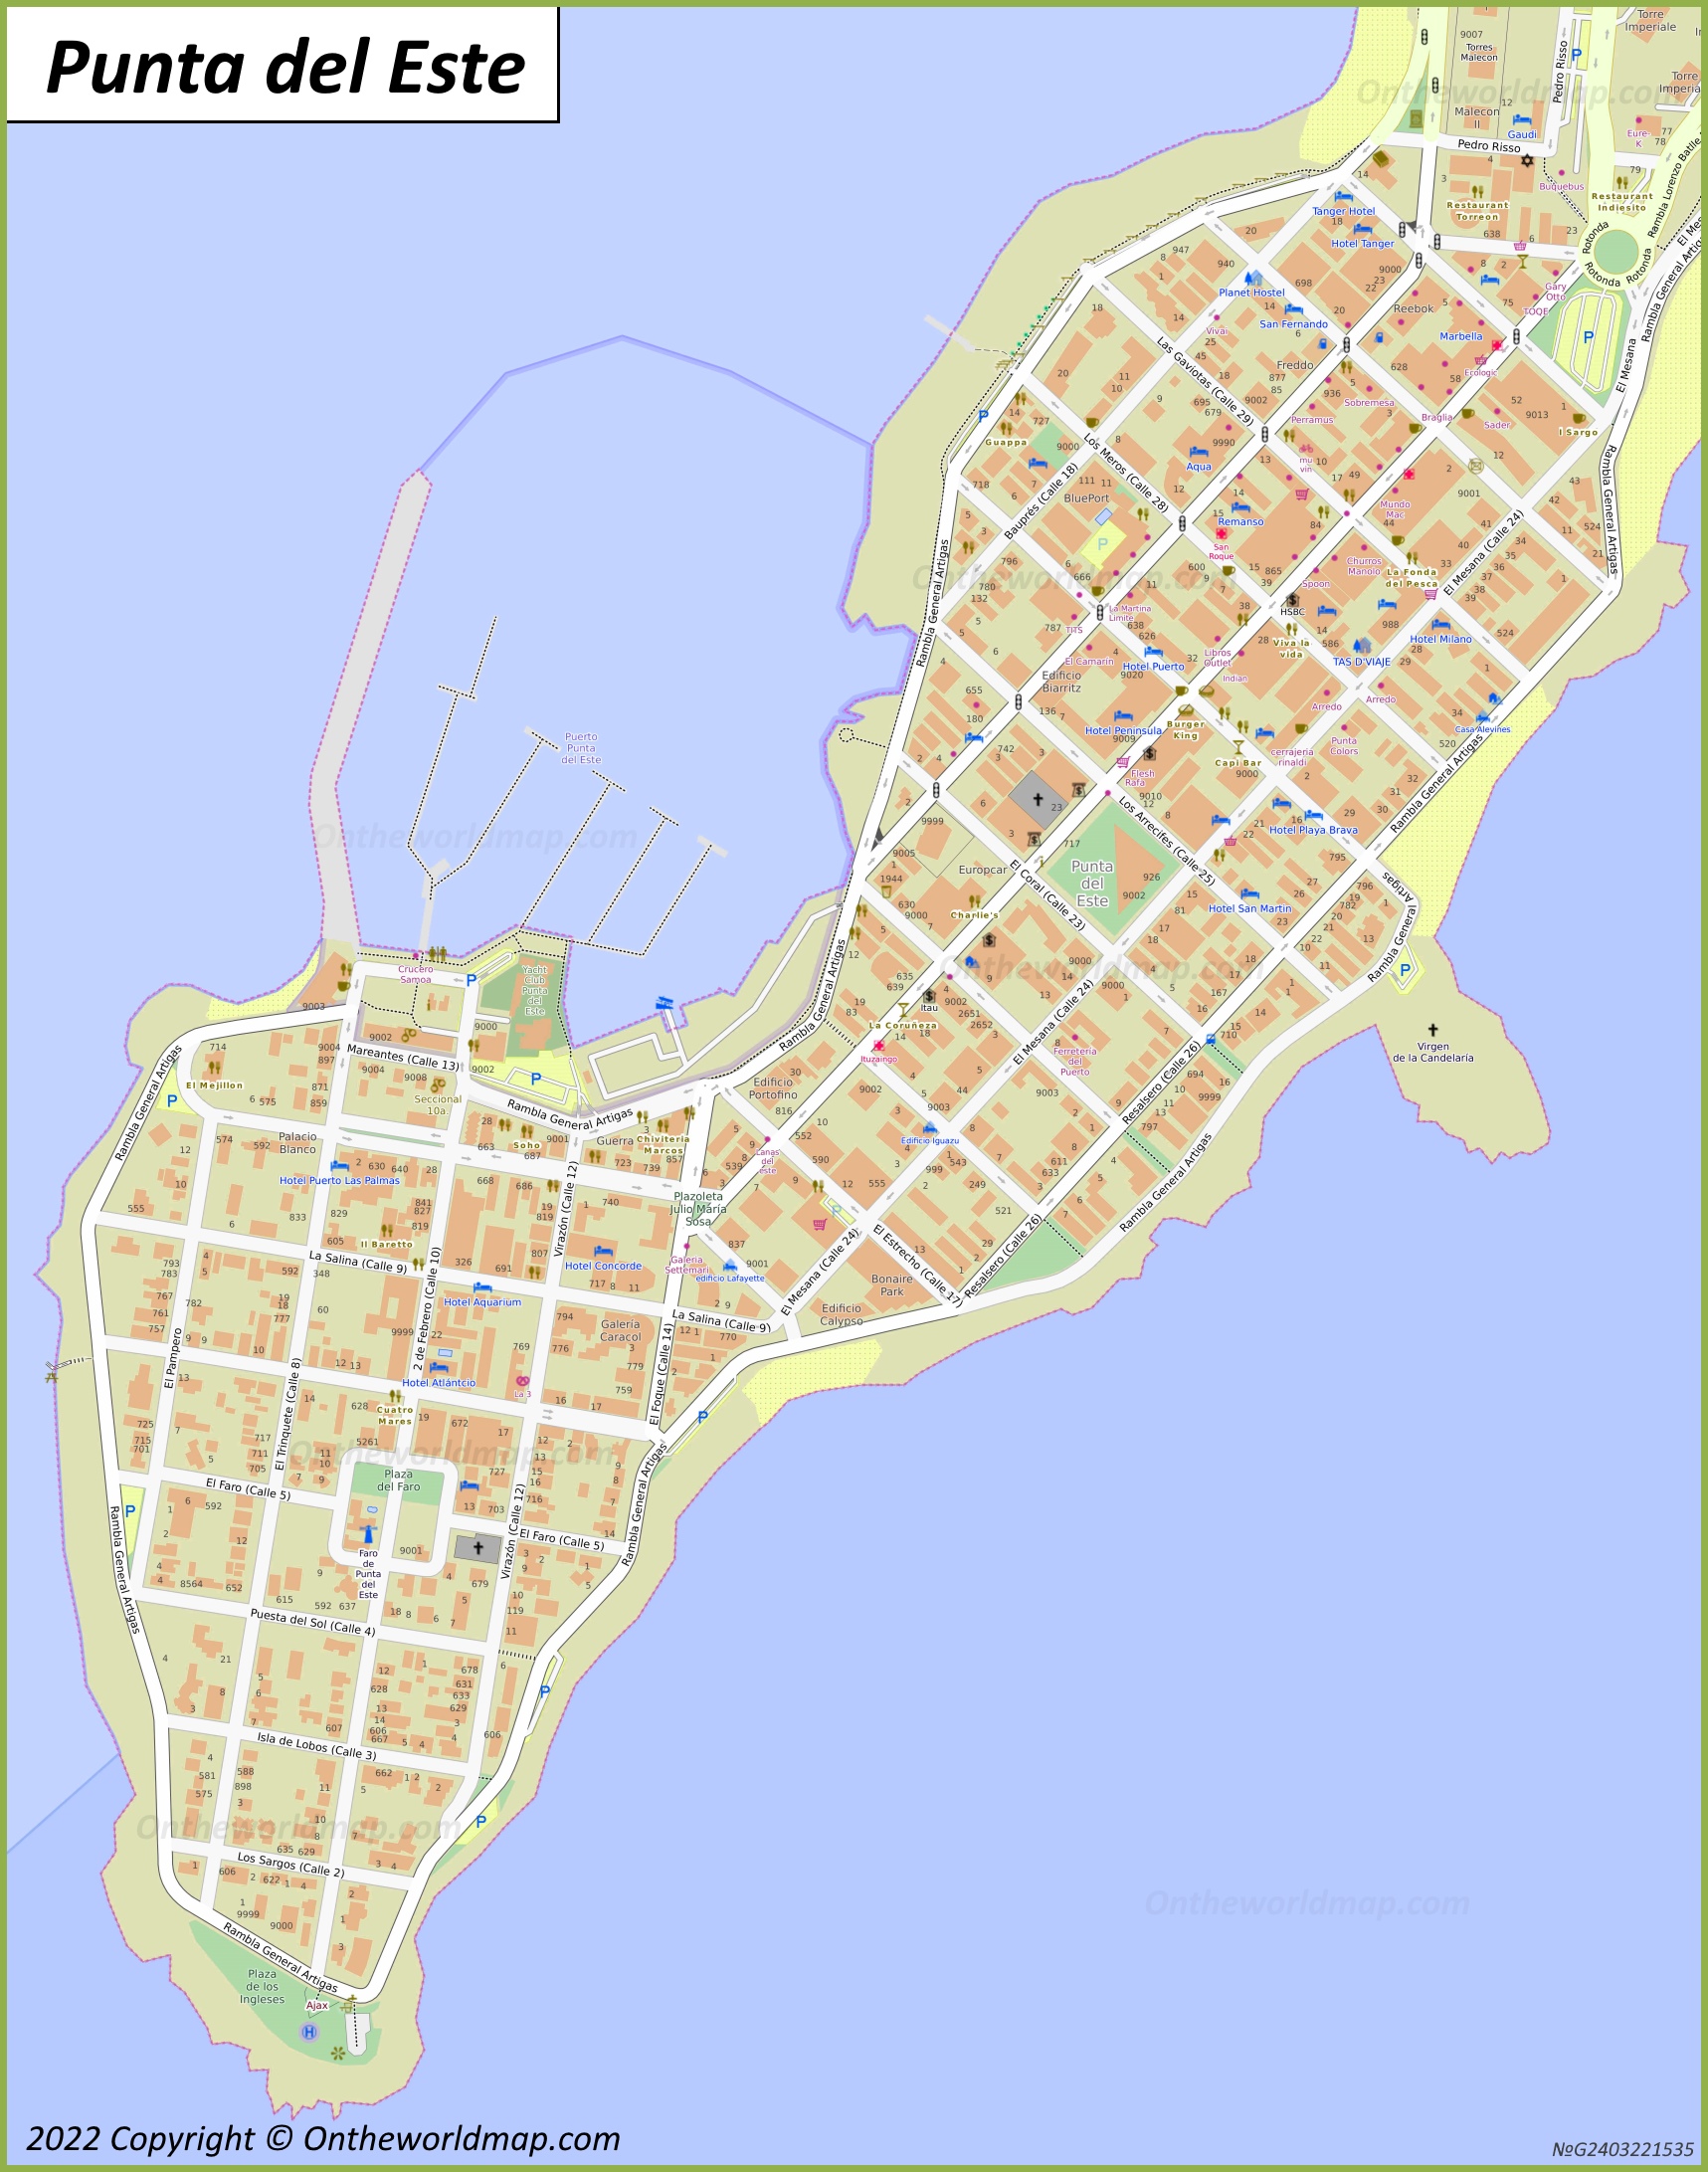 Punta del Este Old Town Map